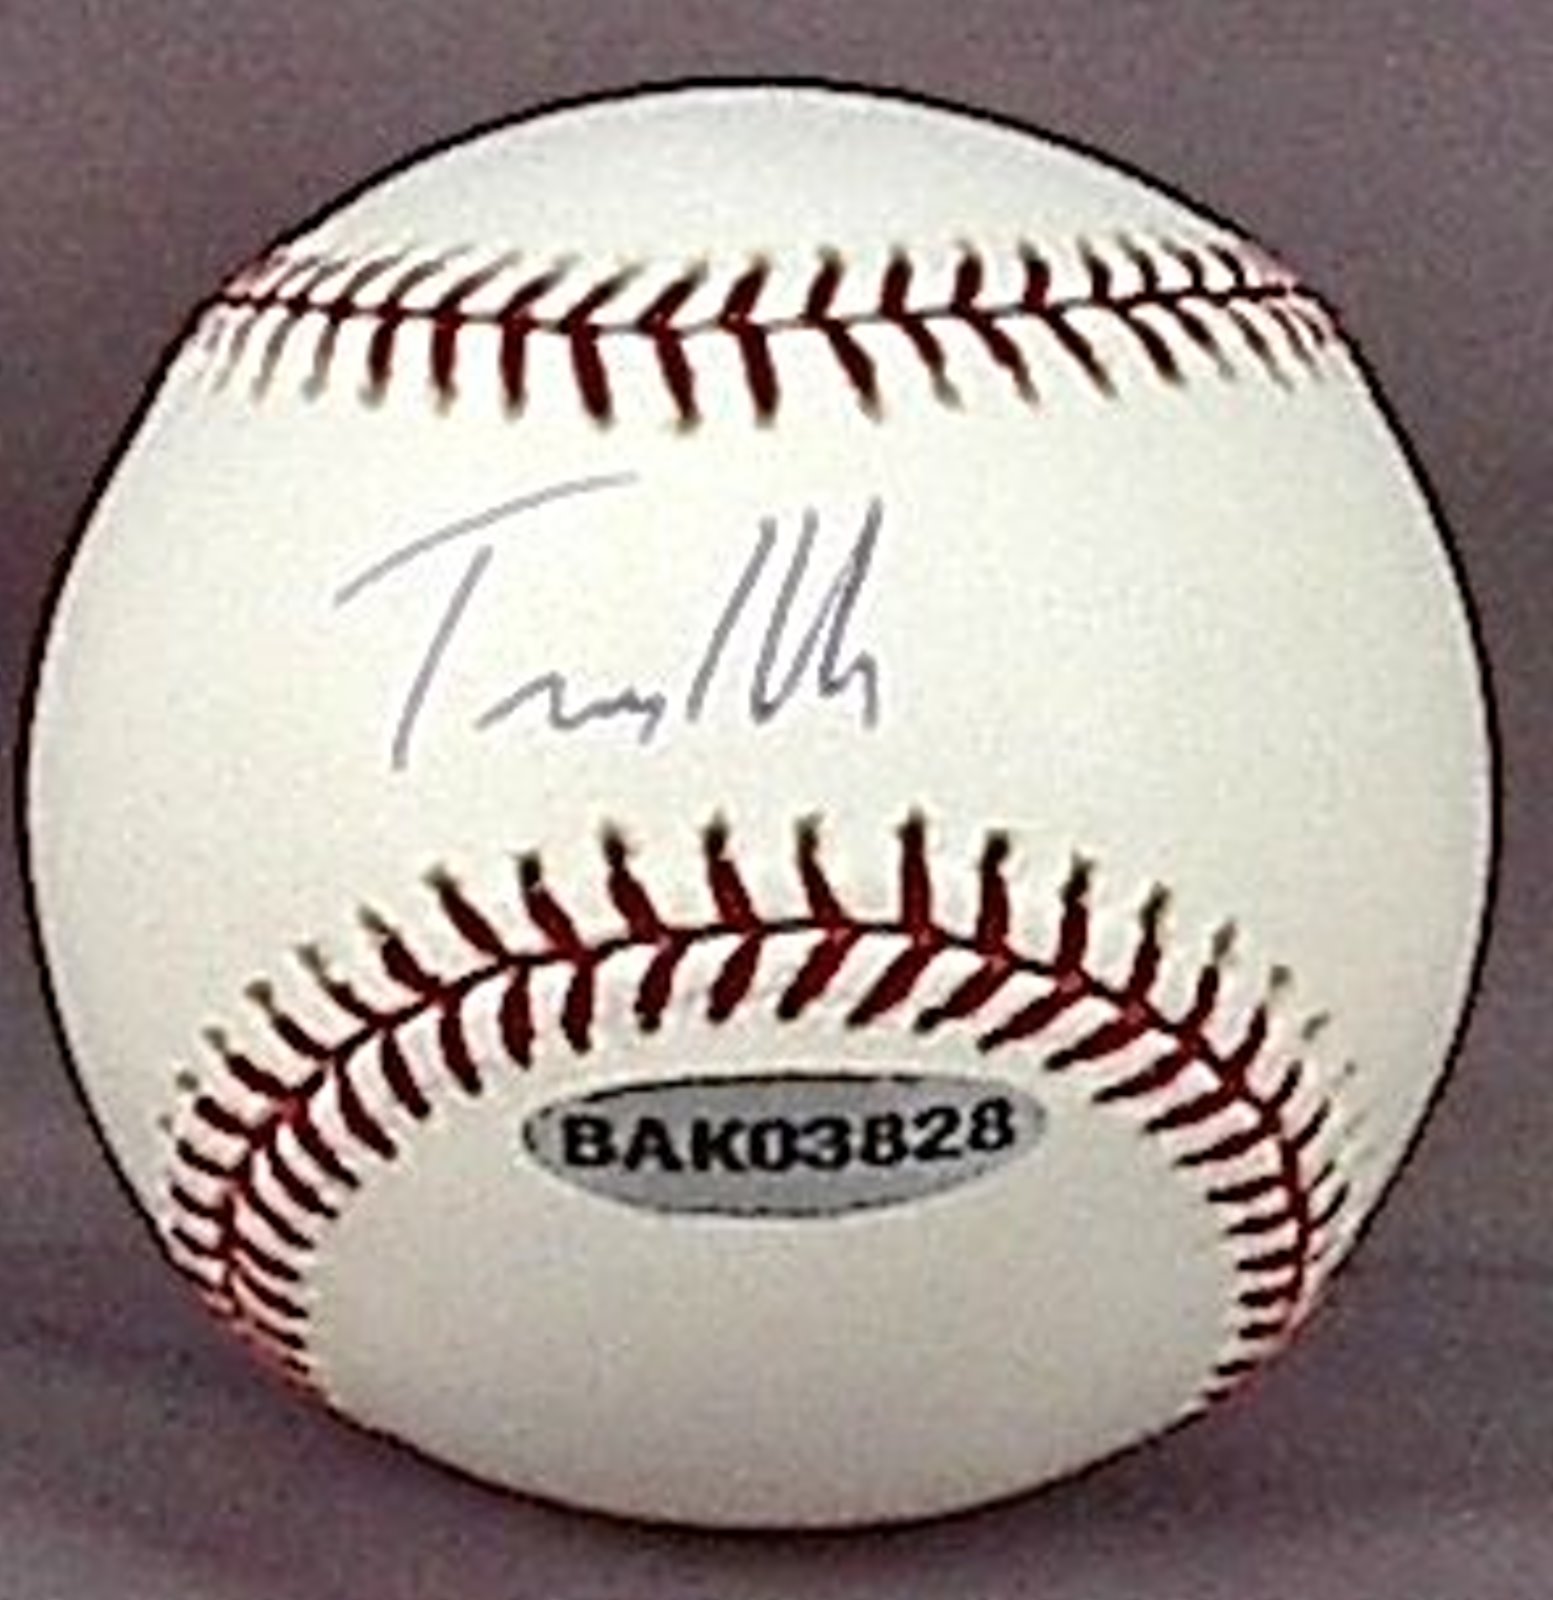 Travis Hafner Autograph Baseball